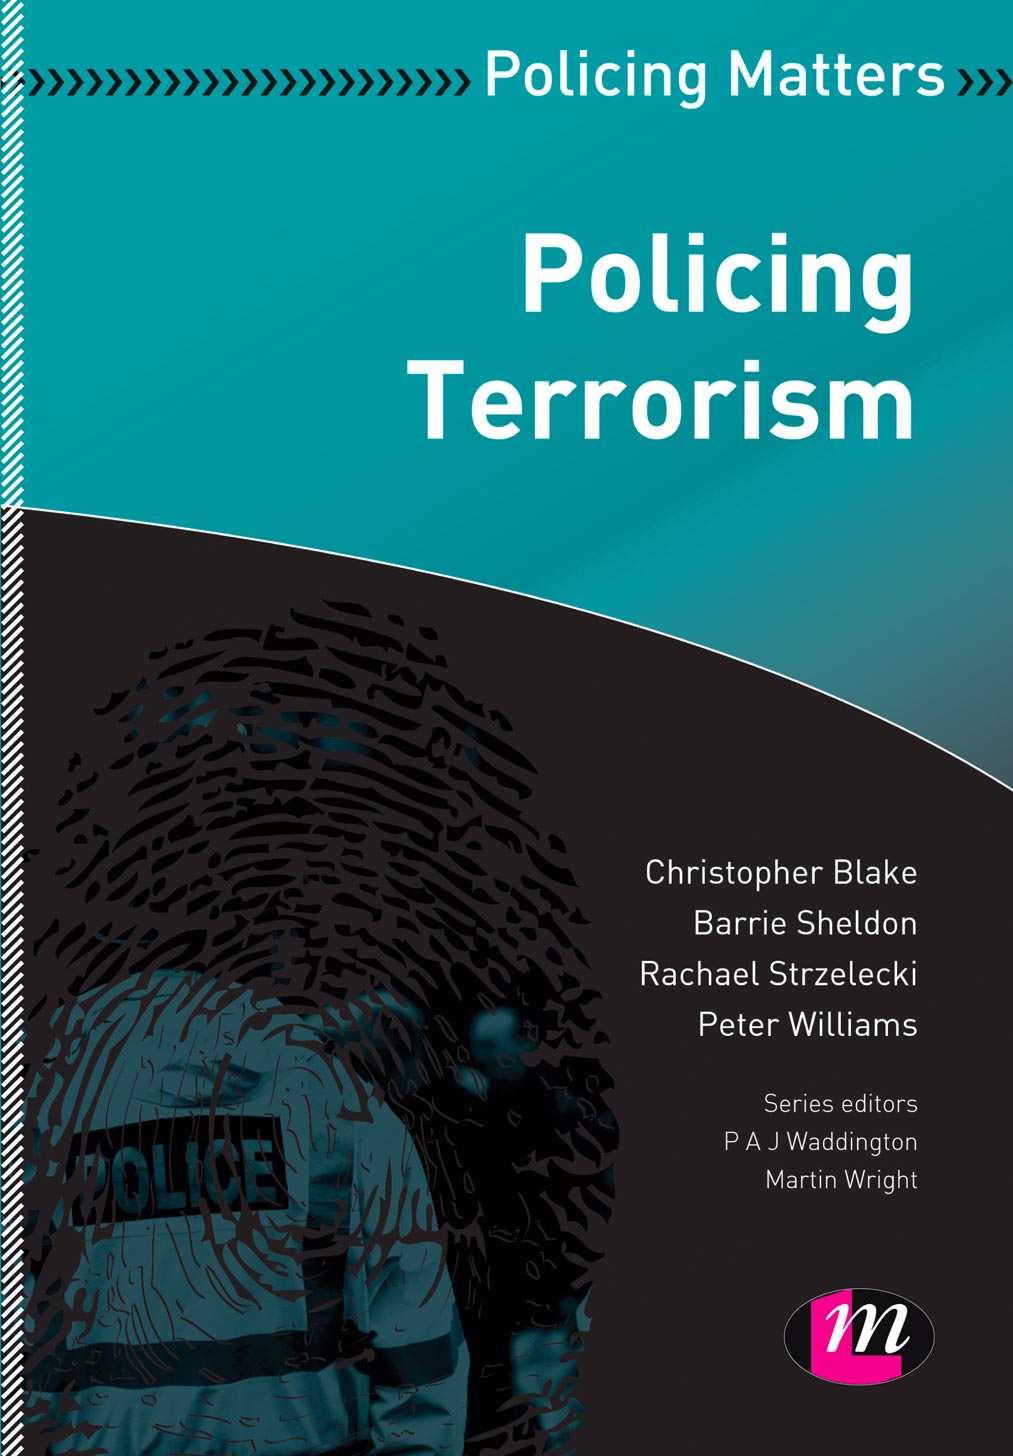 Policing Terrorism - Christopher Blake, Barrie Sheldon, Rachael Strzelecki, Peter Williams